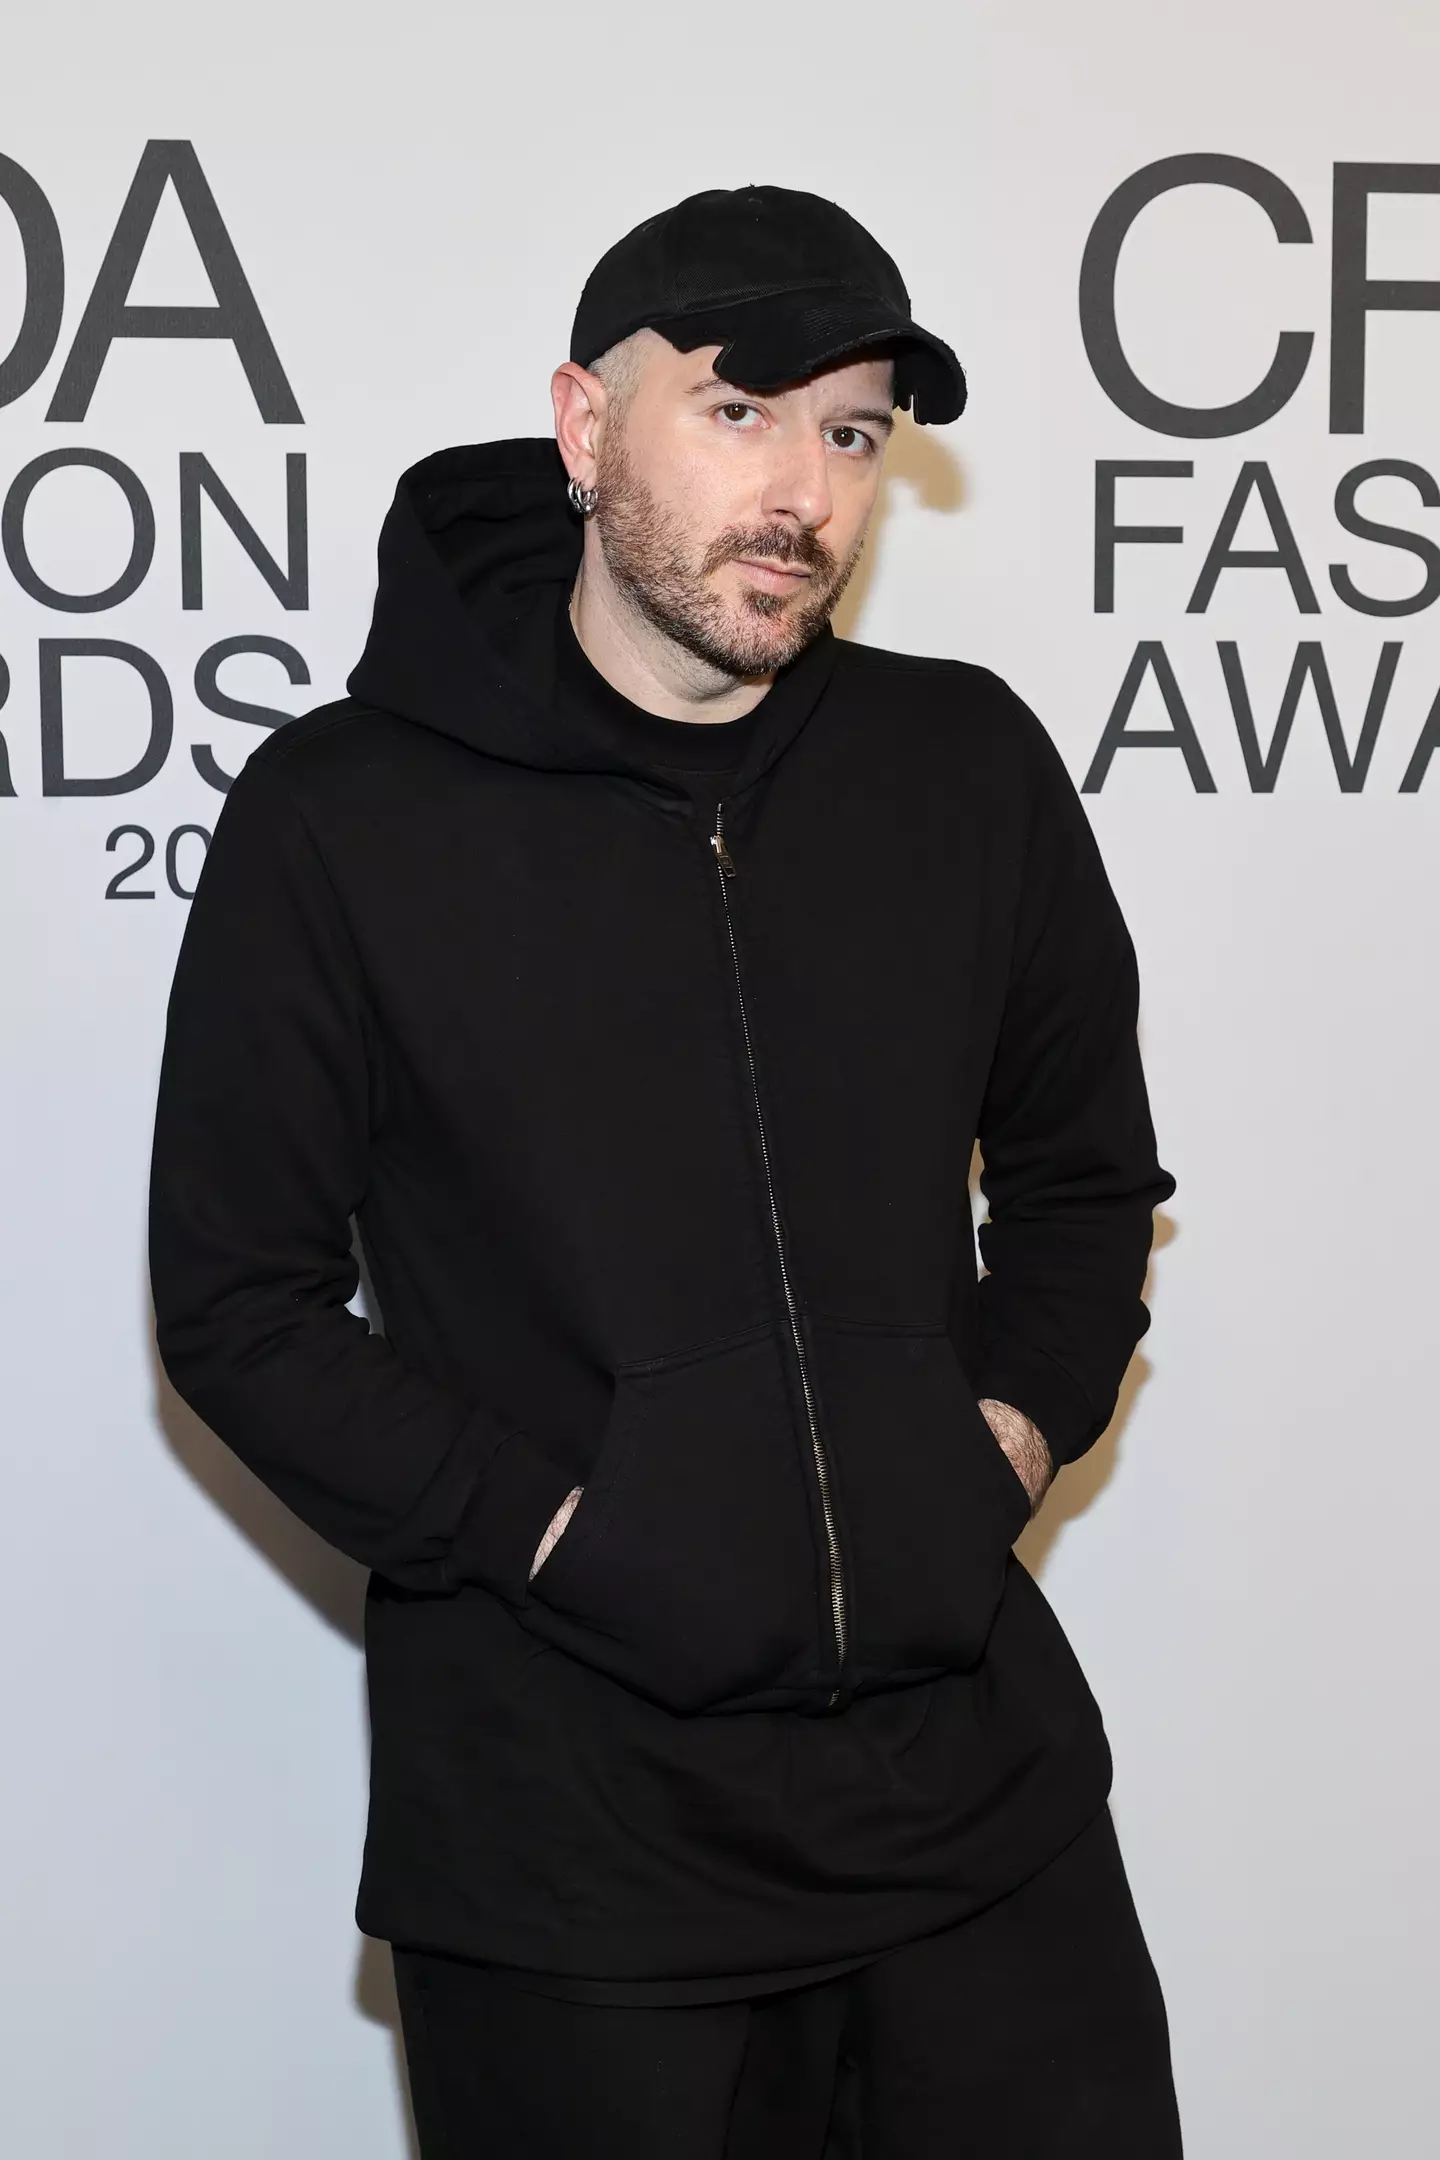 Balenciaga's creative director Demna Gvasalia said he loves a 'fashion scandal'.